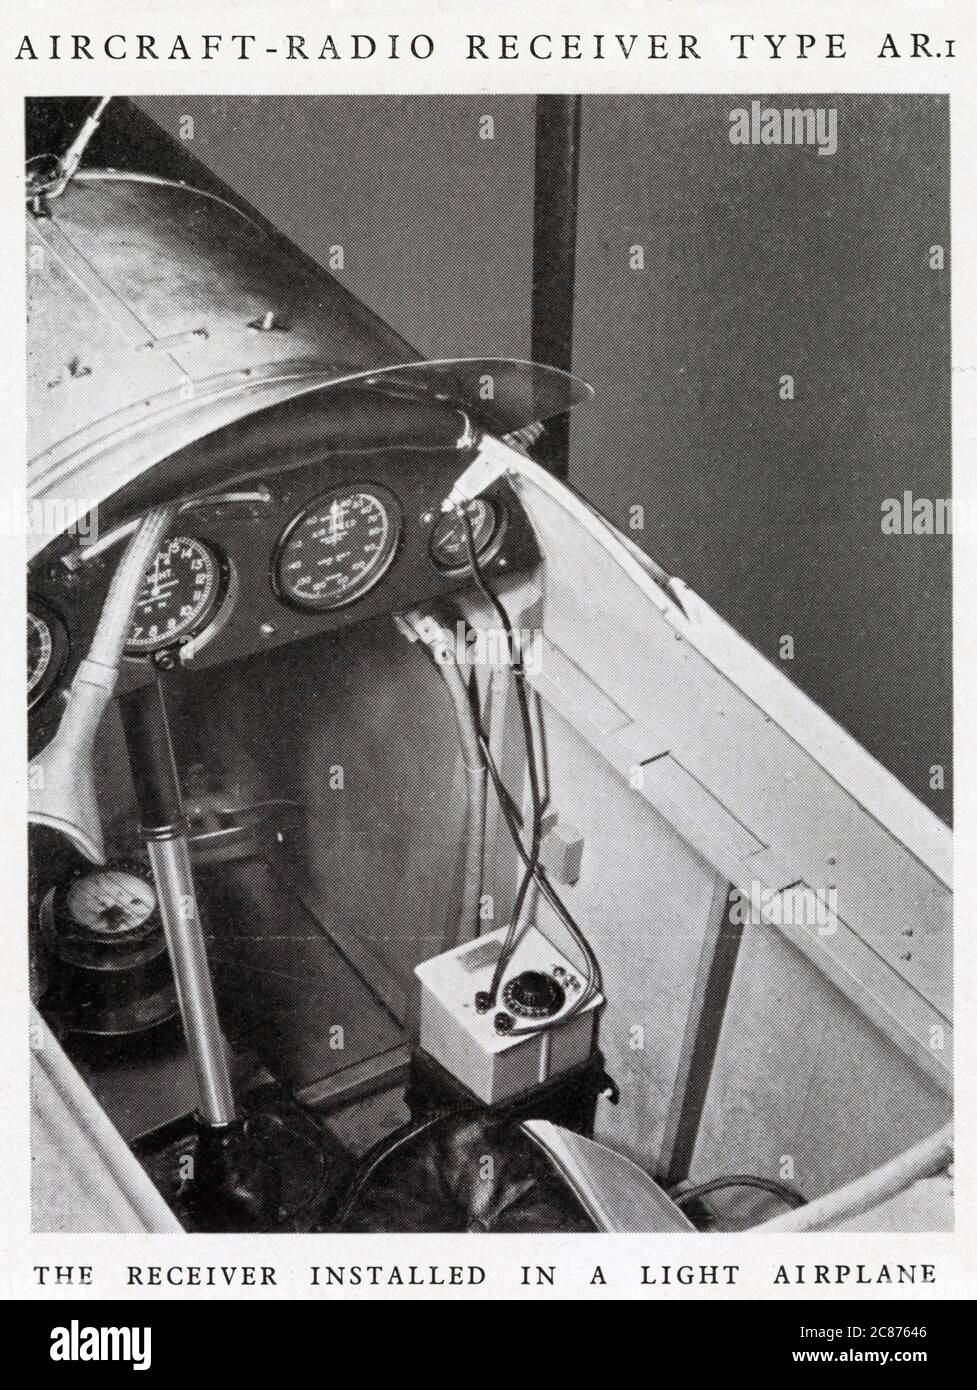 Aircraft radio fotografías e imágenes de alta resolución - Alamy